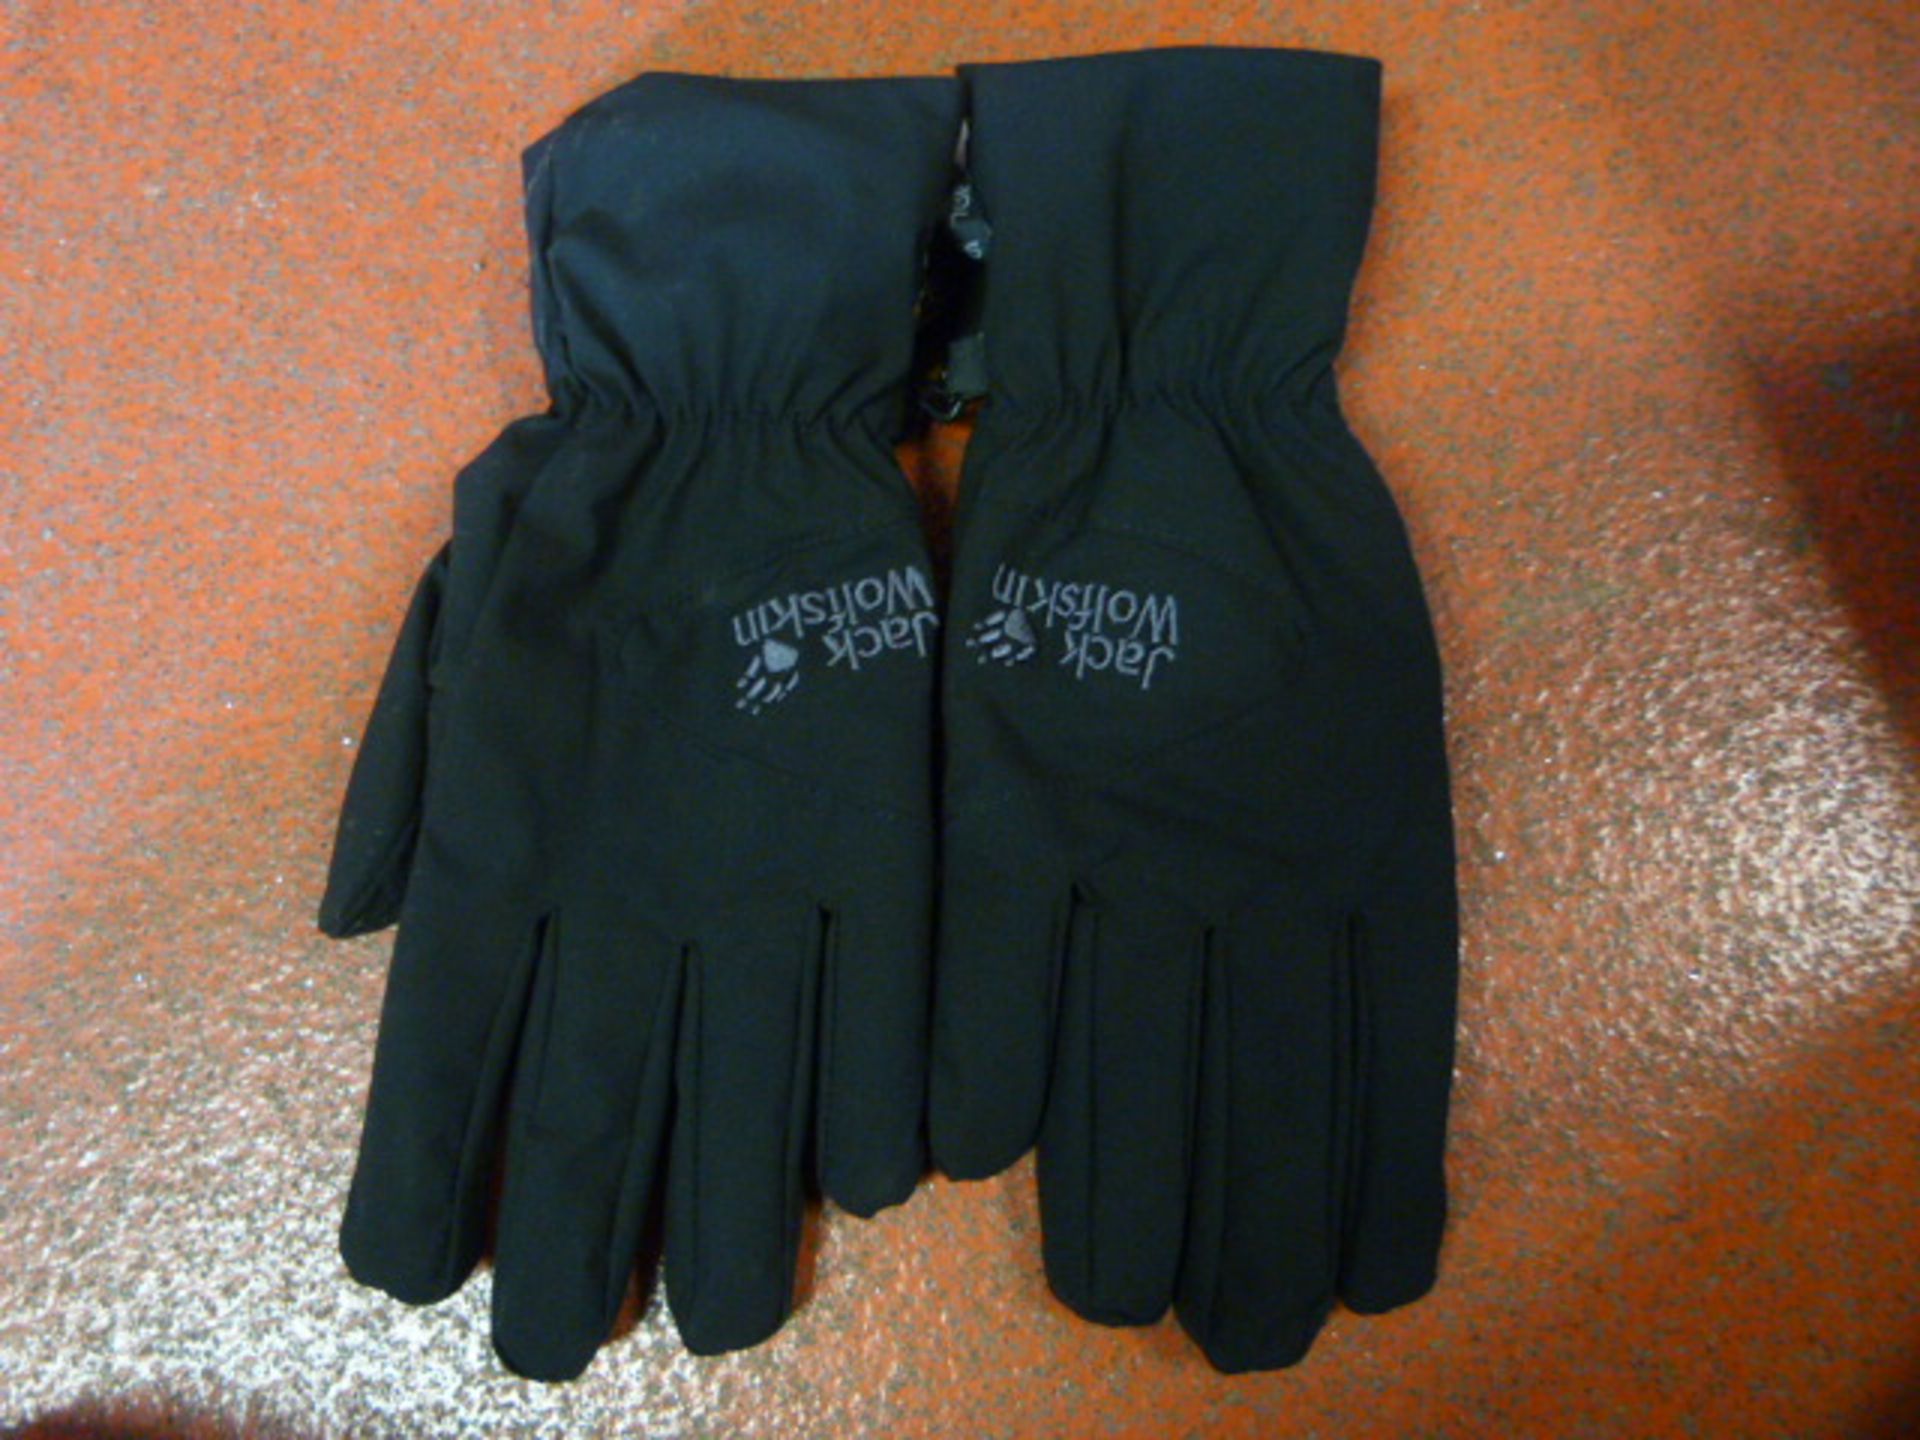 *Stormlock High Loft Gloves in Black Size: XL